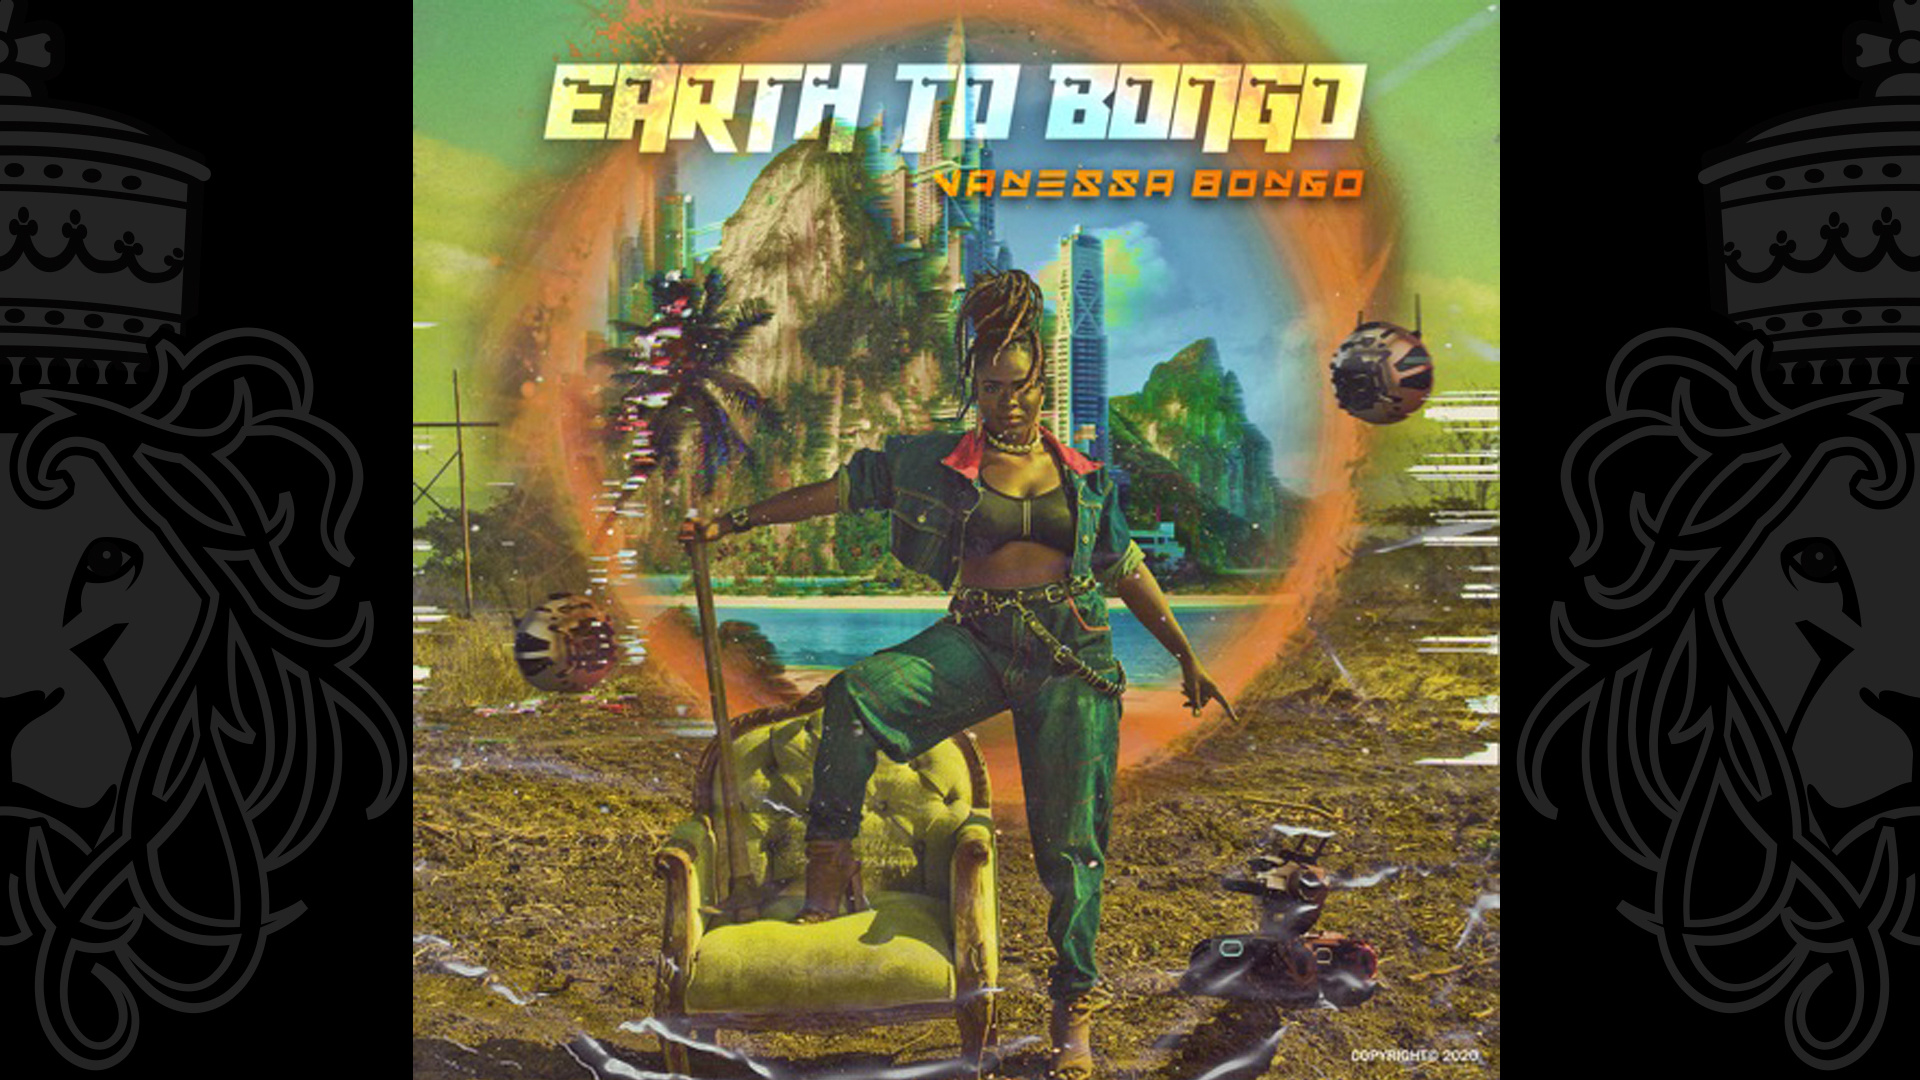 Vanessa Bongo releases "Earth To Bongo" Album